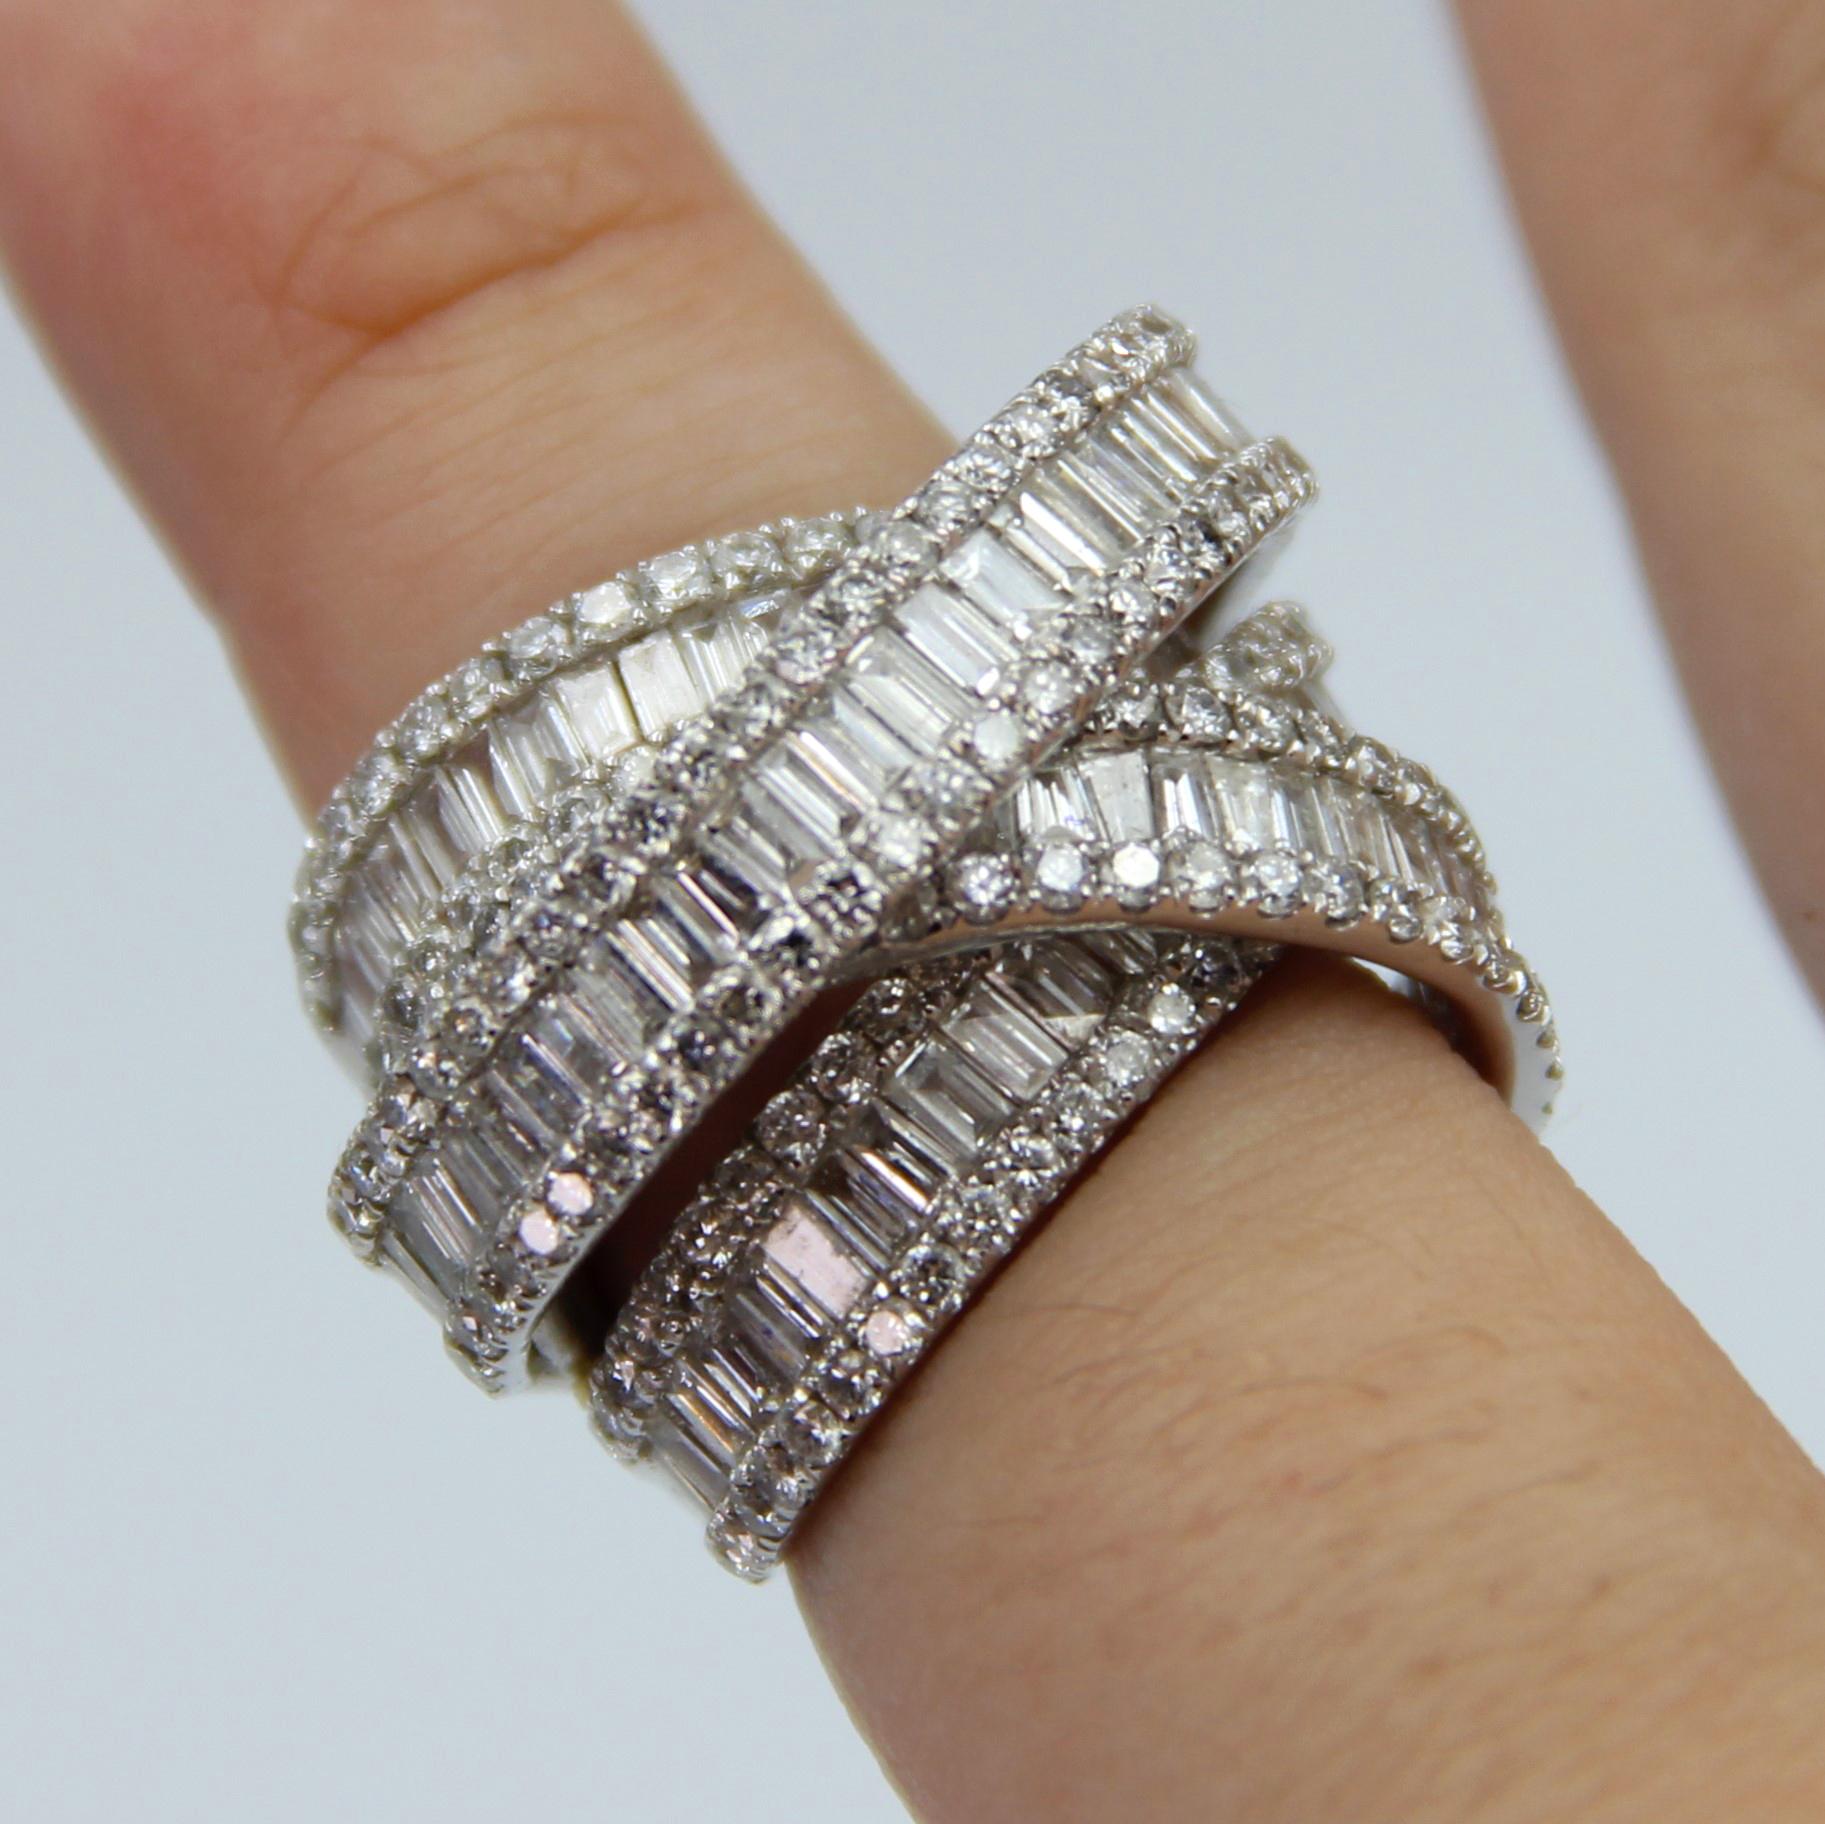 IGSL Certified 5.26 Carat Diamond Spiral Ring For Sale 3